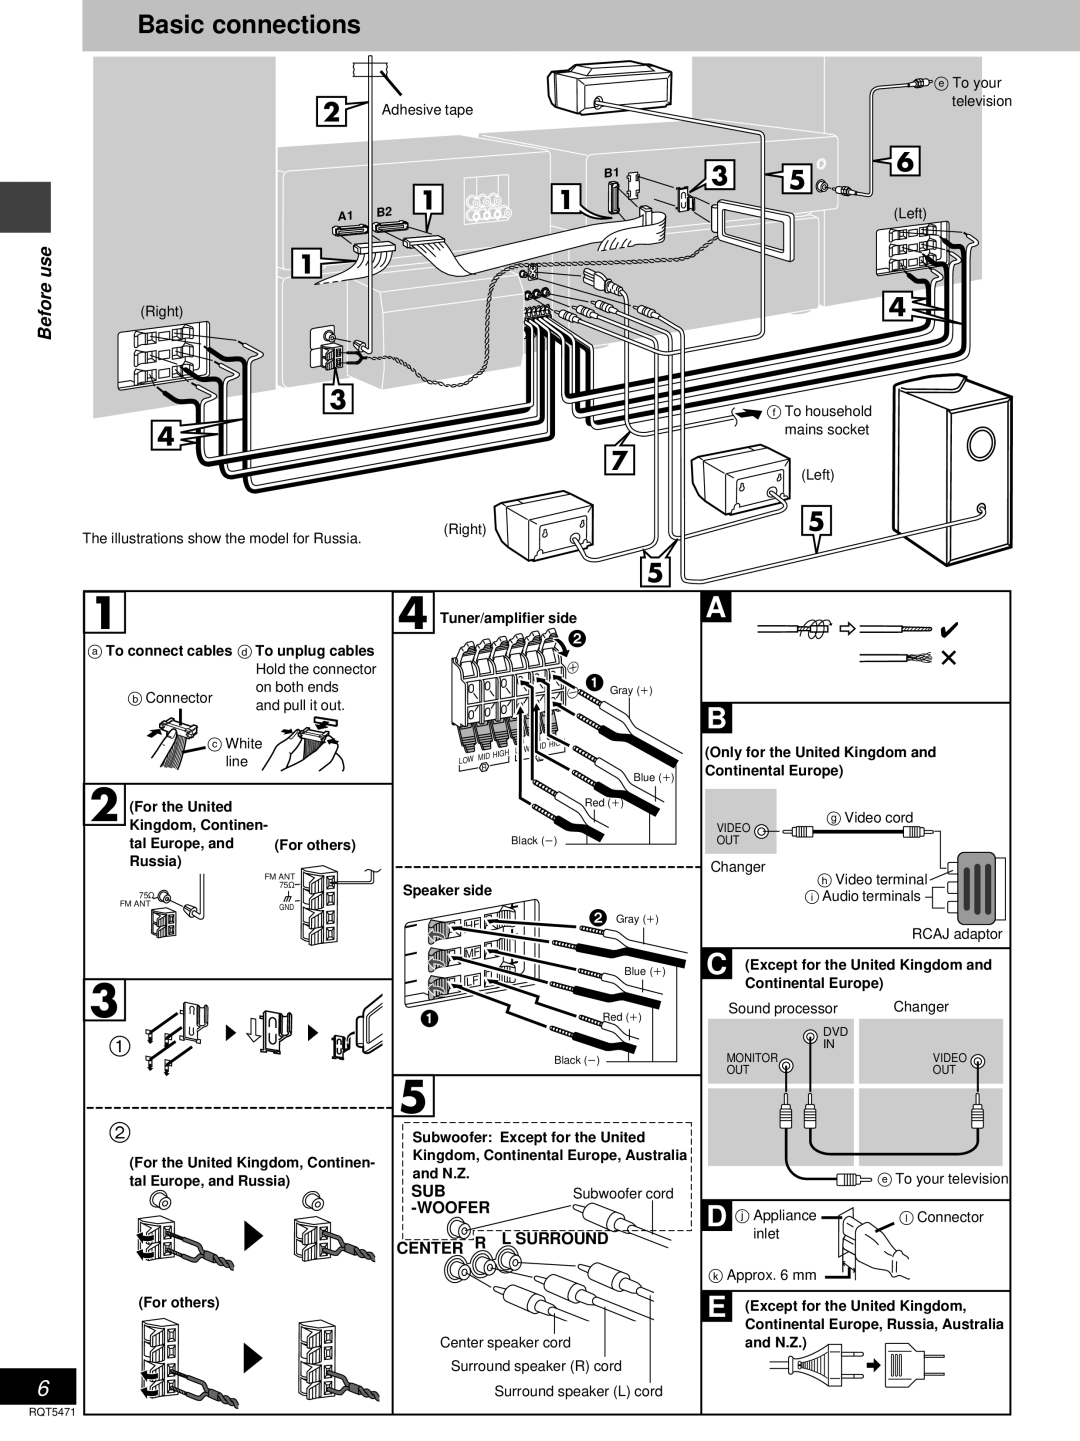 Technics SC-DV170 manual Basic connections 